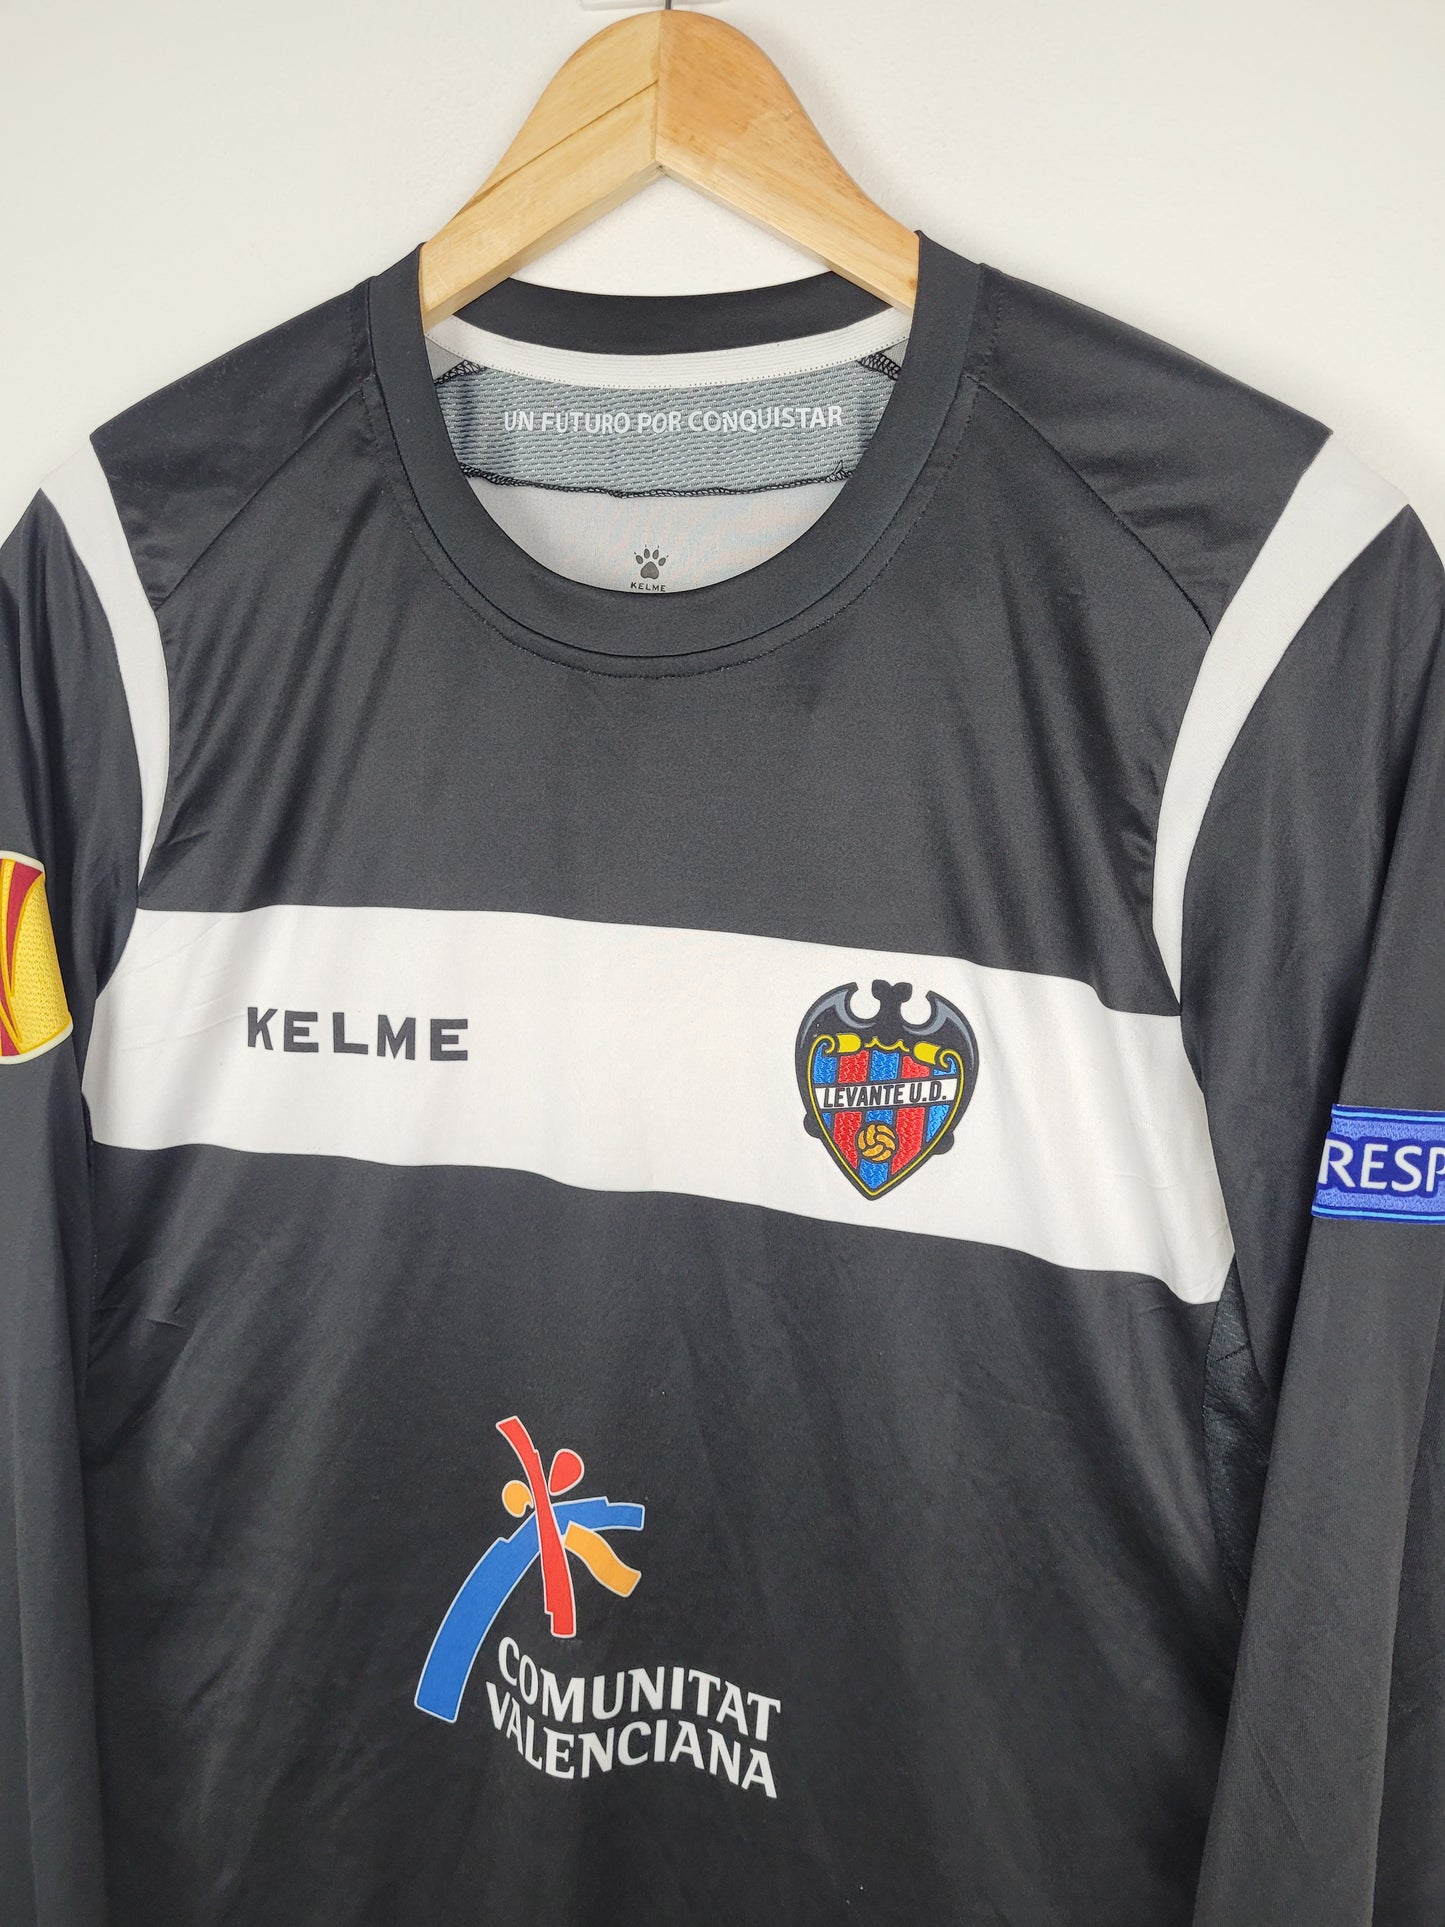 
                  
                    Original Levante UD Matchworn Away Jersey #5 of Hector Rodas 2012-2013 - XL
                  
                